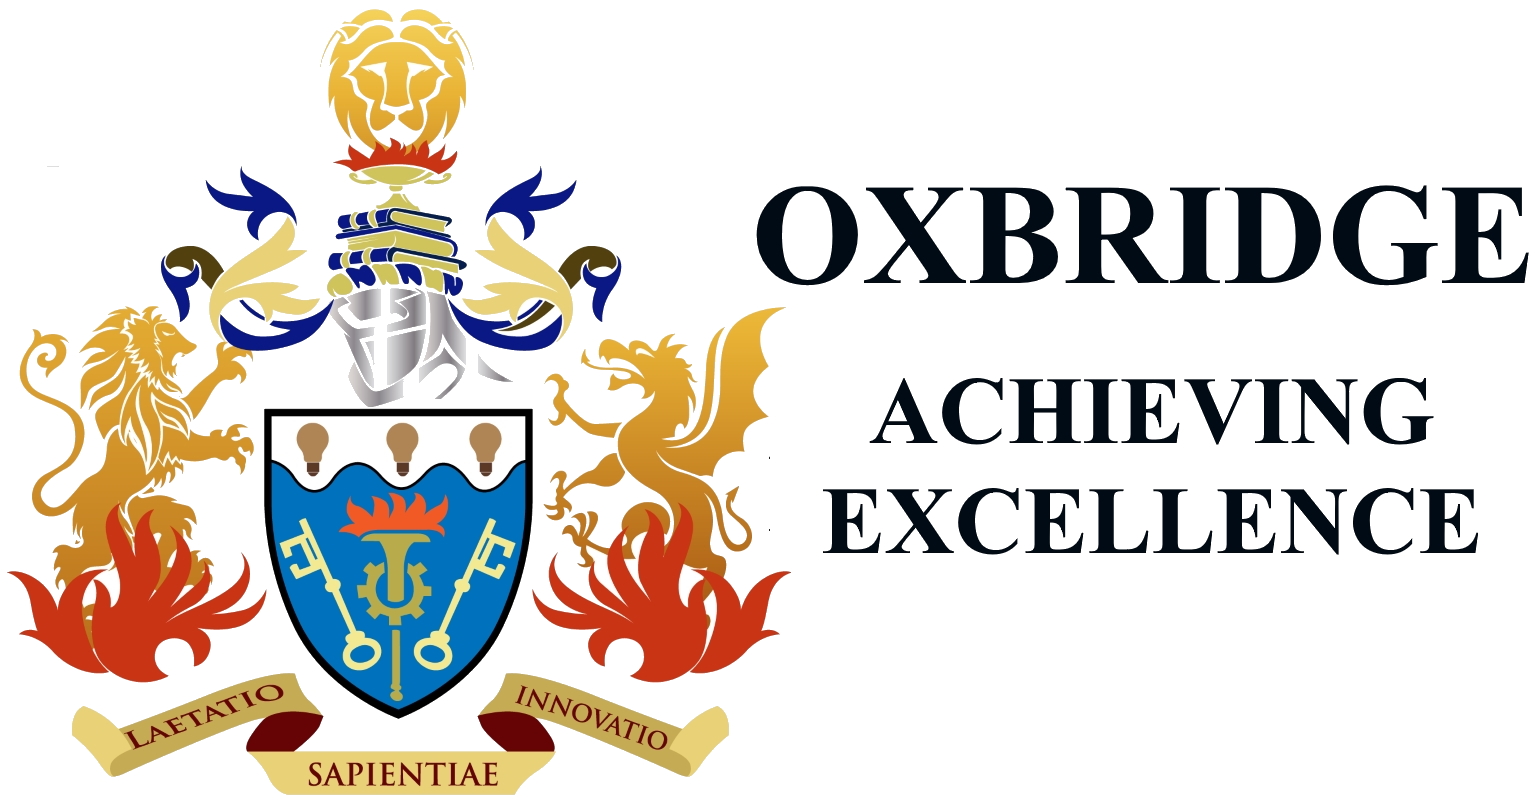 Welcome to Oxbridge Training